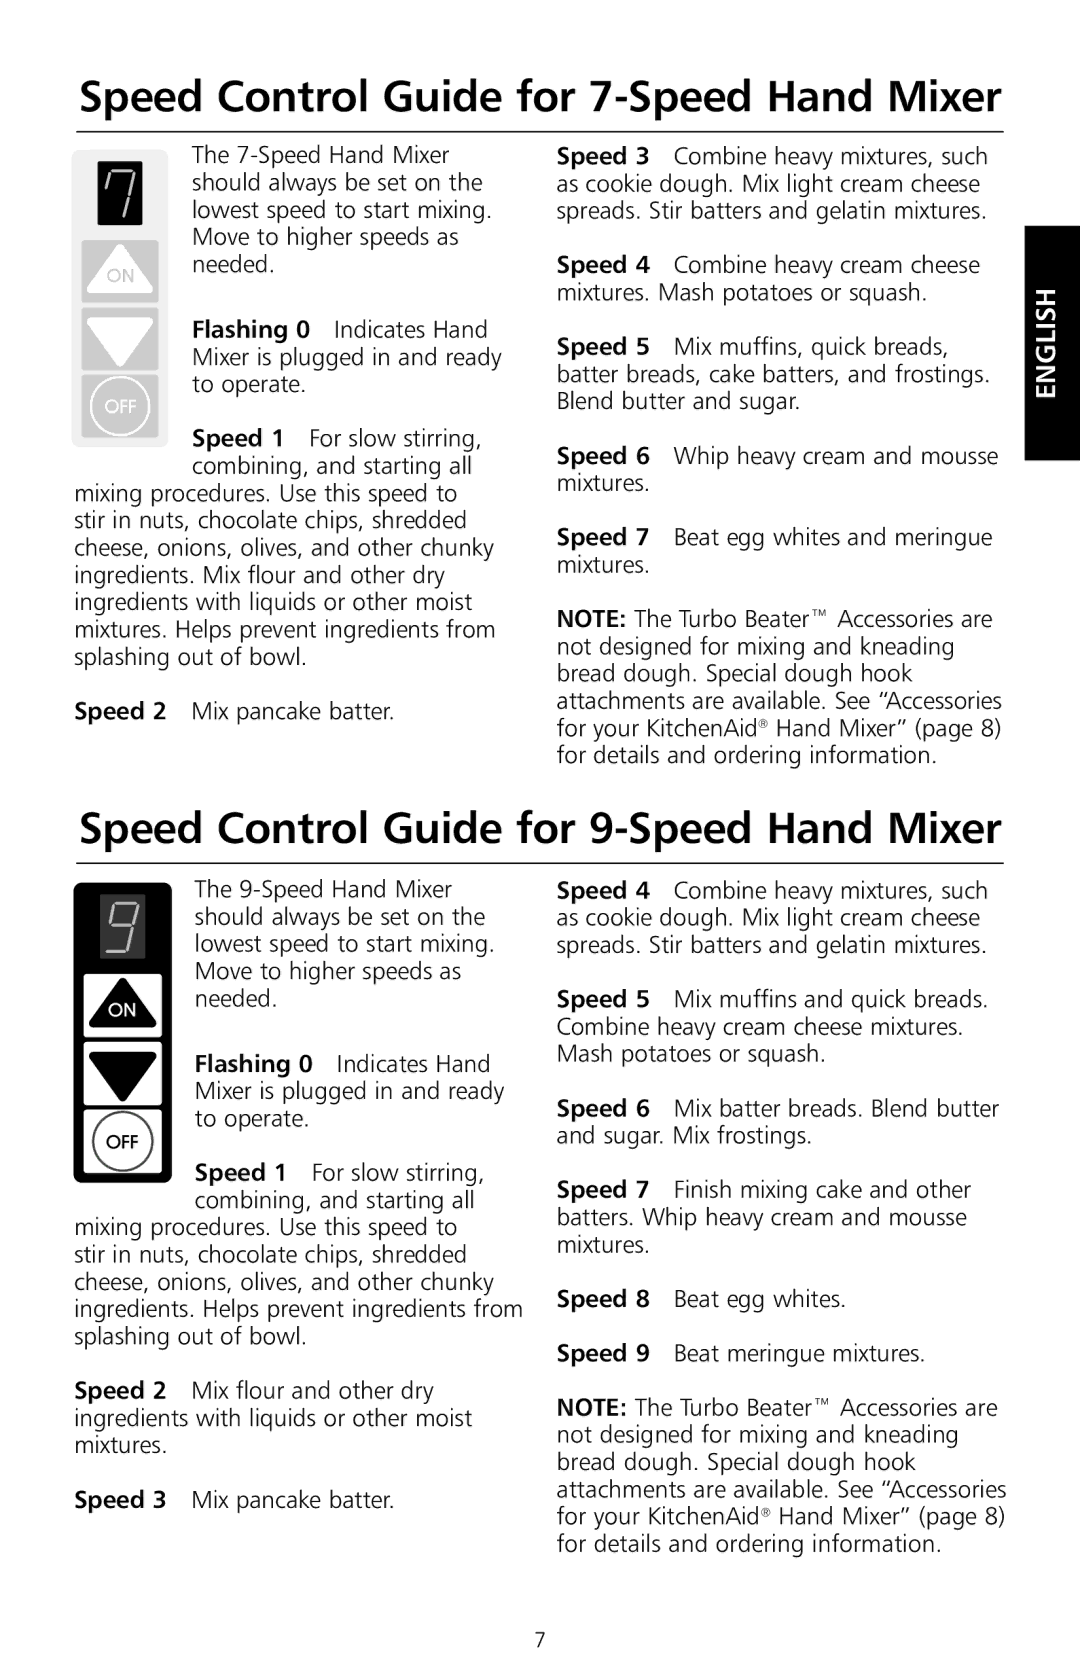 KitchenAid KHM7T, KHM9 manual Speed Control Guide for 7-Speed Hand Mixer, Speed Control Guide for 9-Speed Hand Mixer 